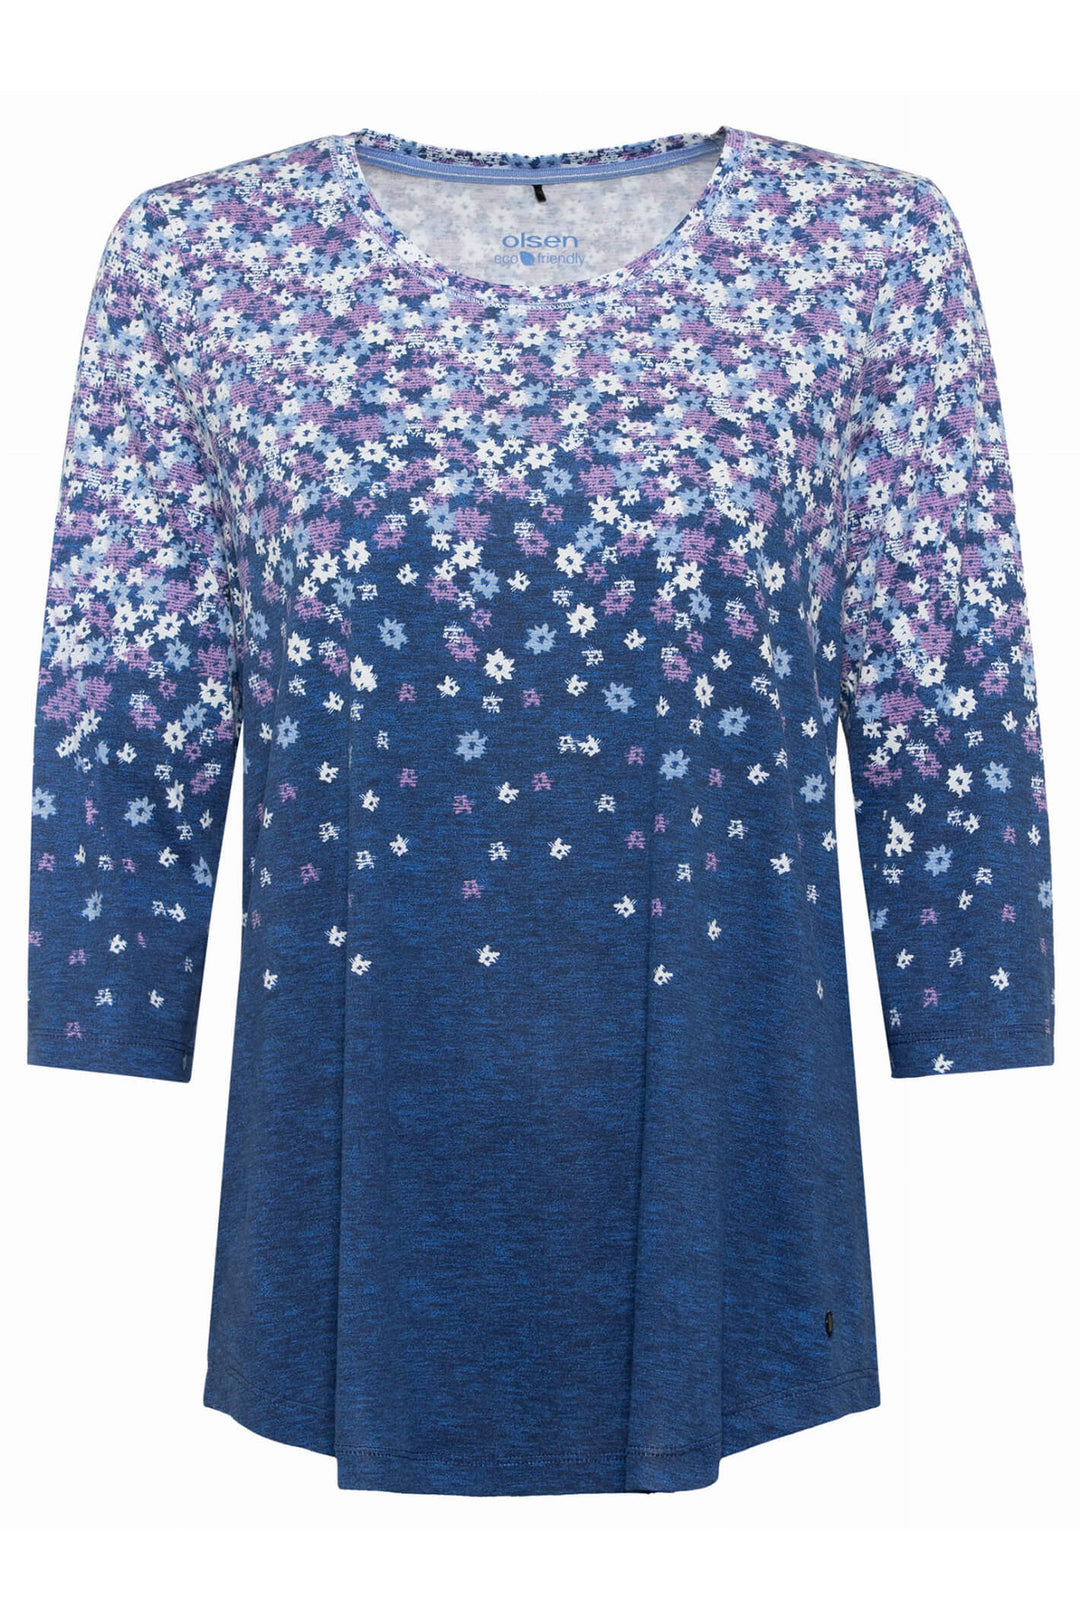 Olsen 11104448 Ink Blue Flower Print T-Shirt - Shirley Allum Boutique